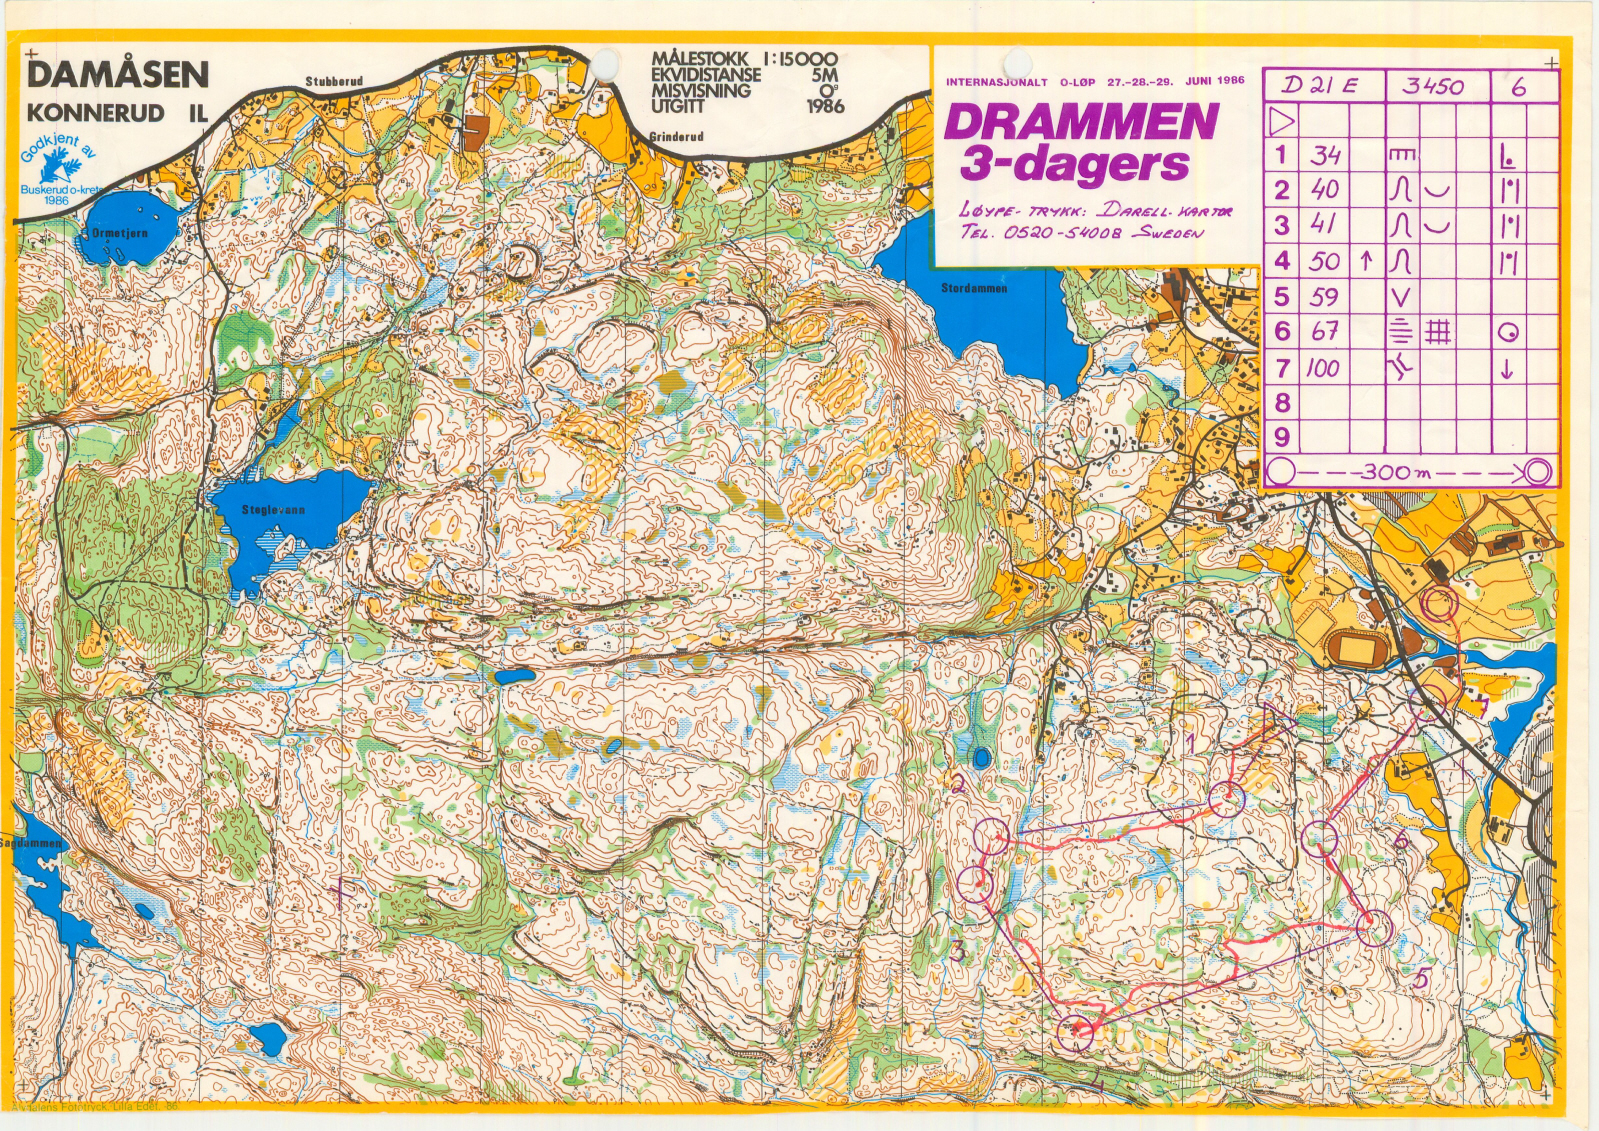 Drammen 3-dagers etappe 1 (27.06.1986)